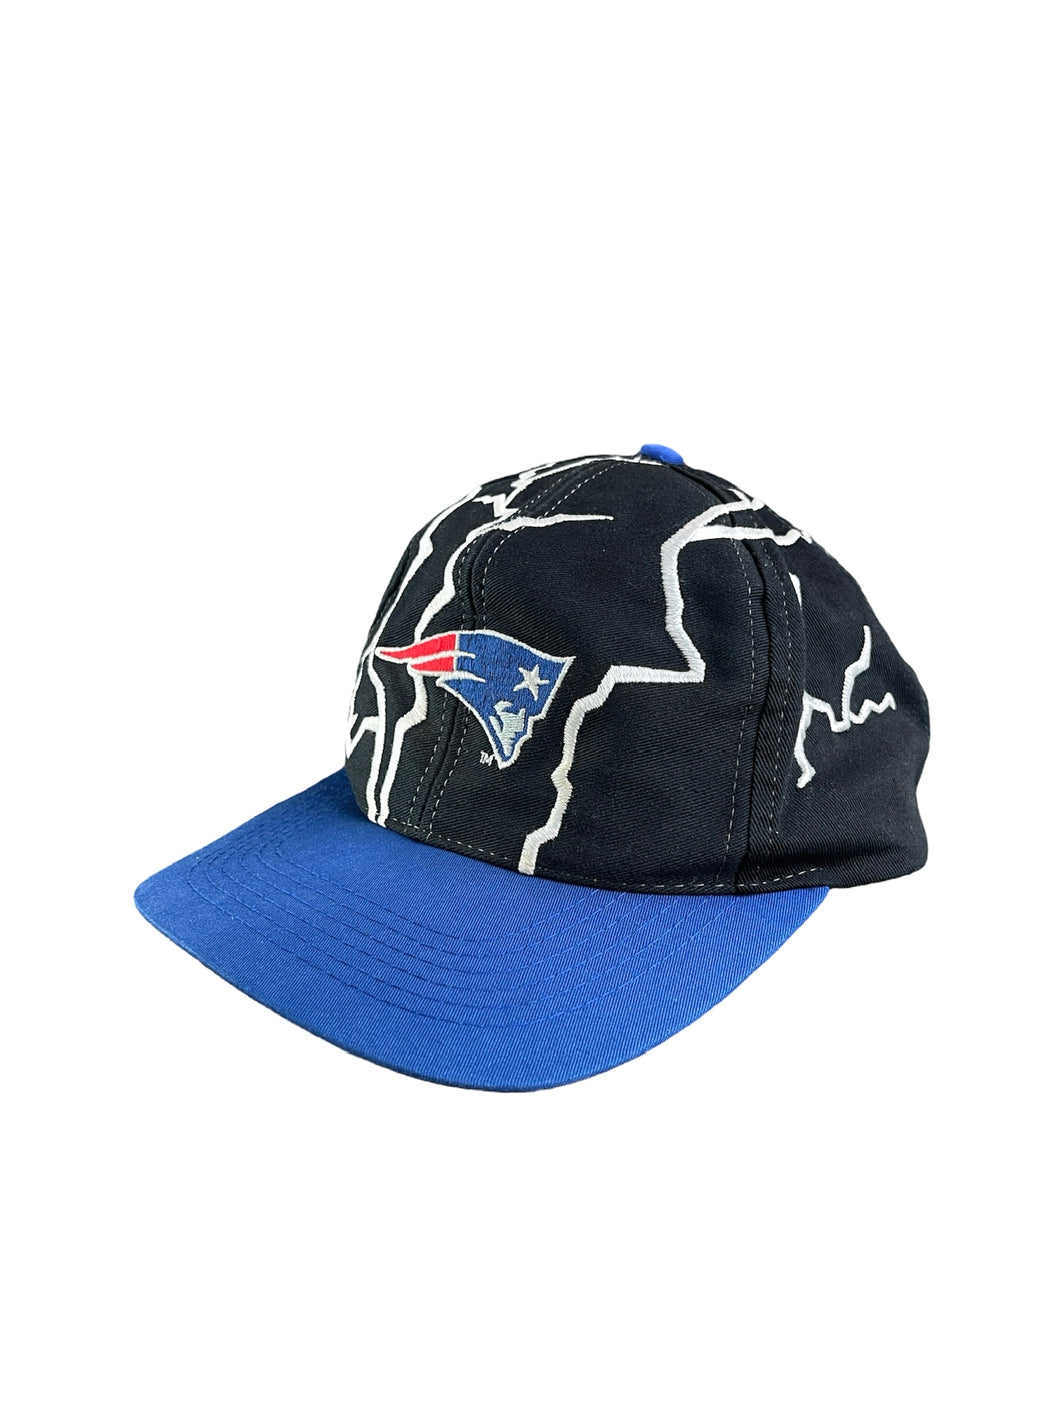 NFL Patriots Lightning Cap - One Size